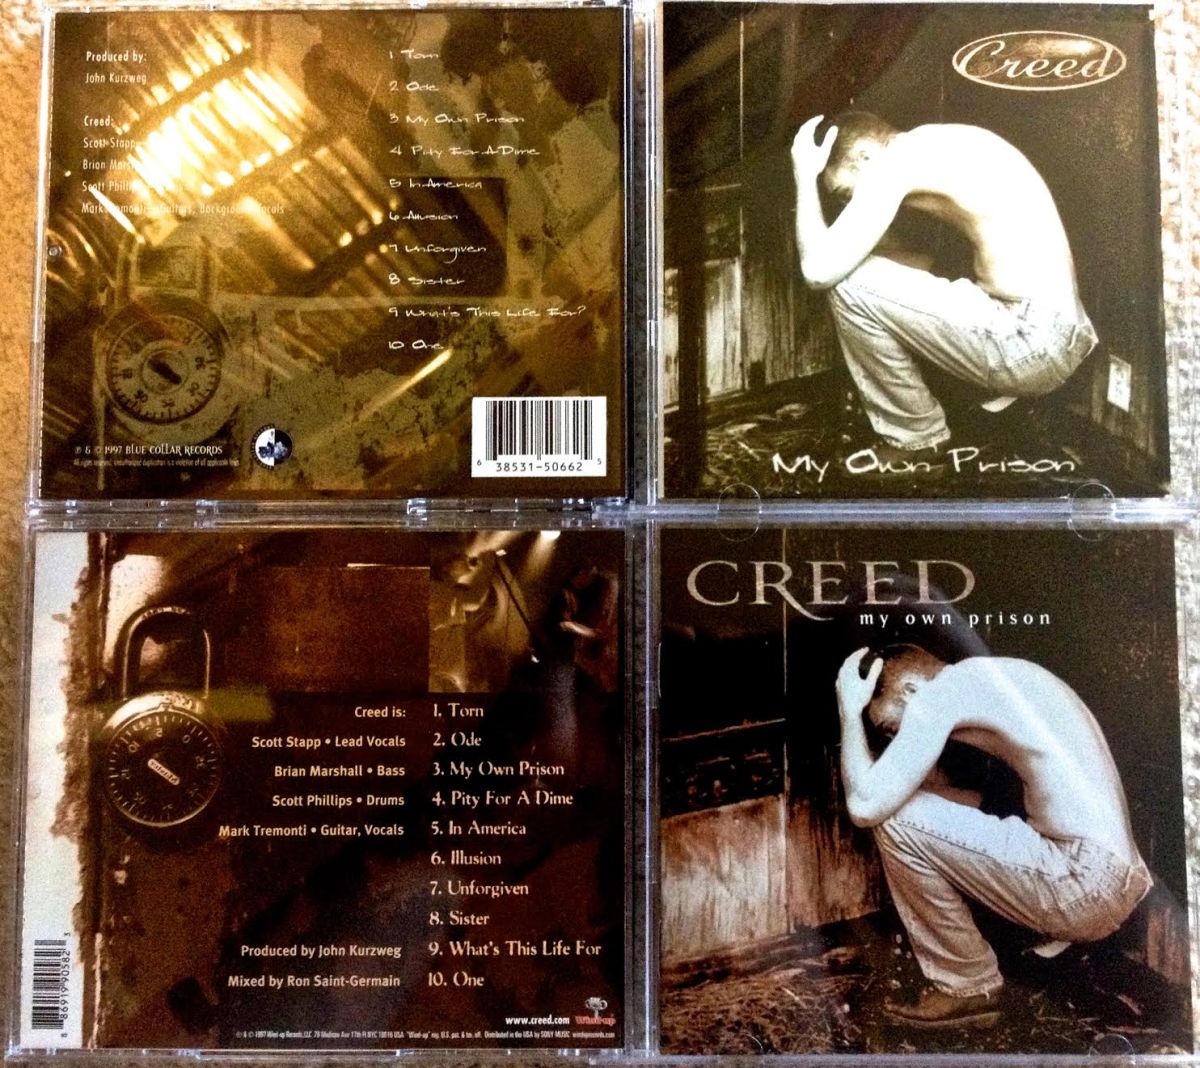 My Sacrifice lyrics - Creed (Made by me)